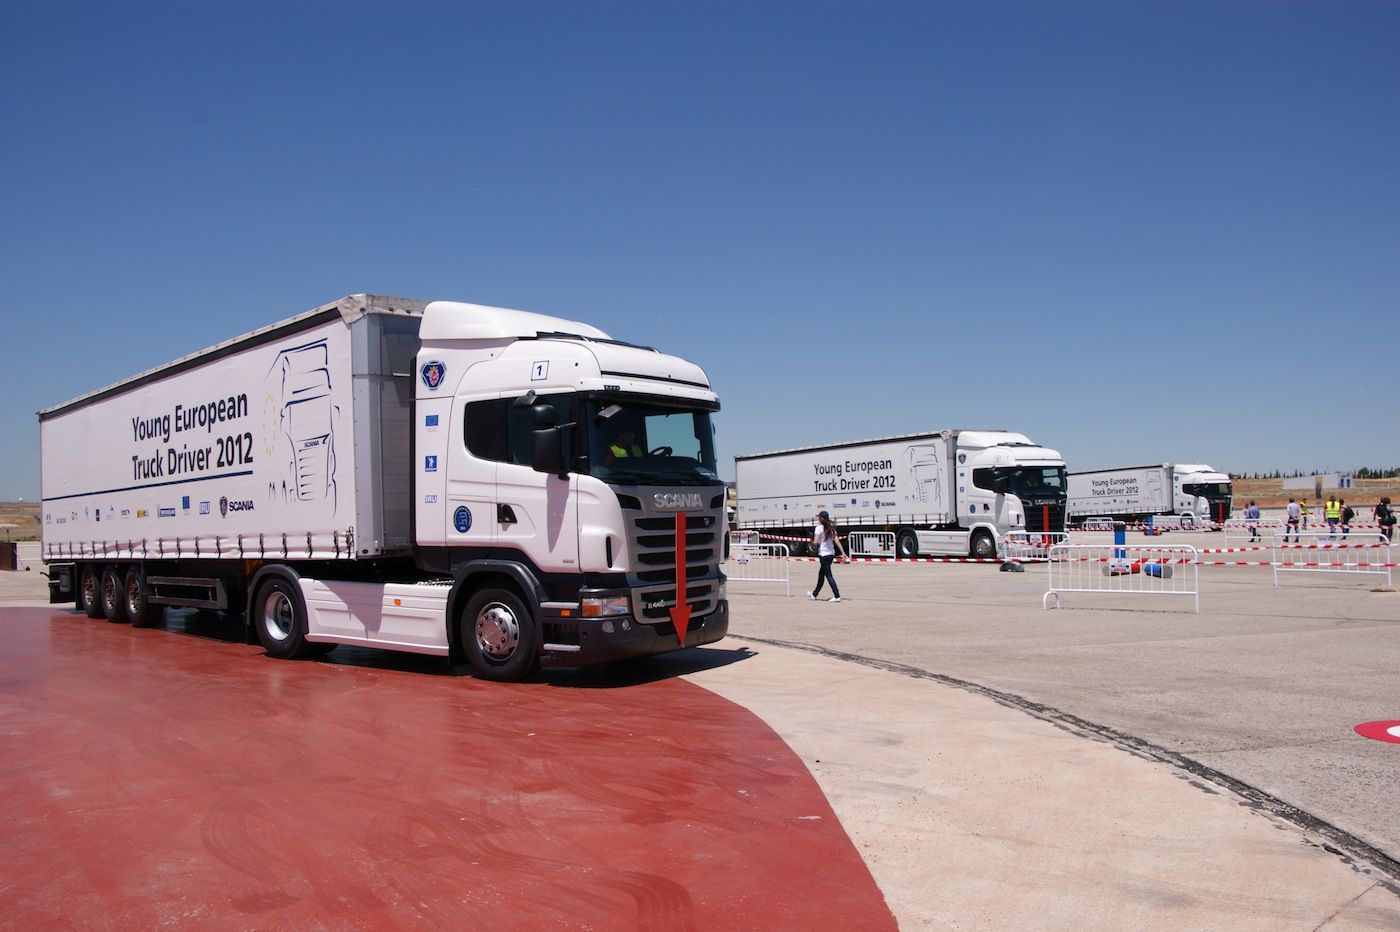 Campeonato Joven conductor europeo Scania 2012.